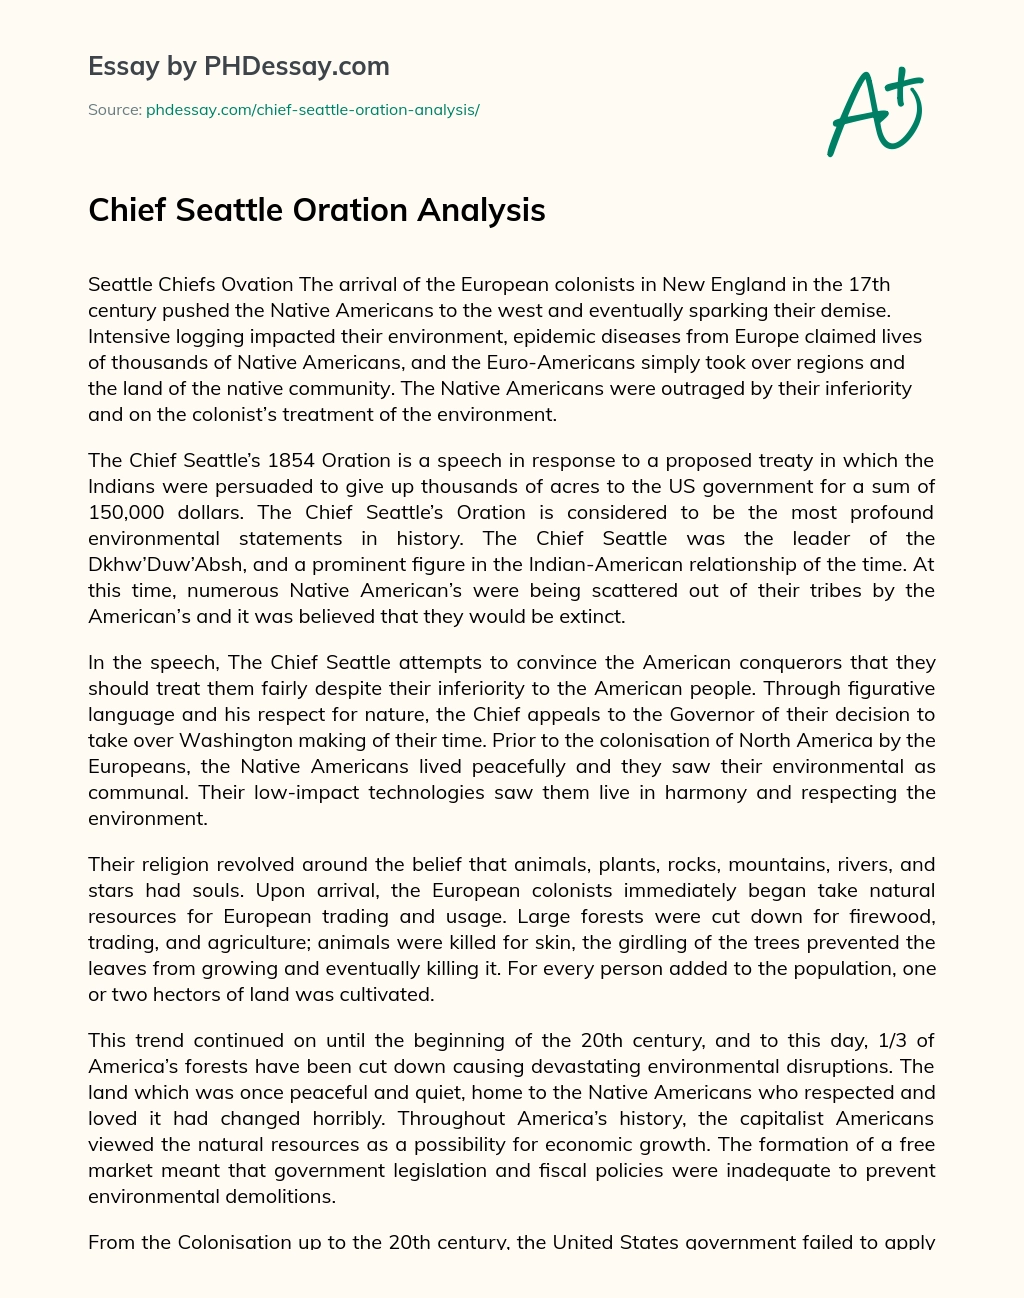 Chief Seattle Oration Analysis essay